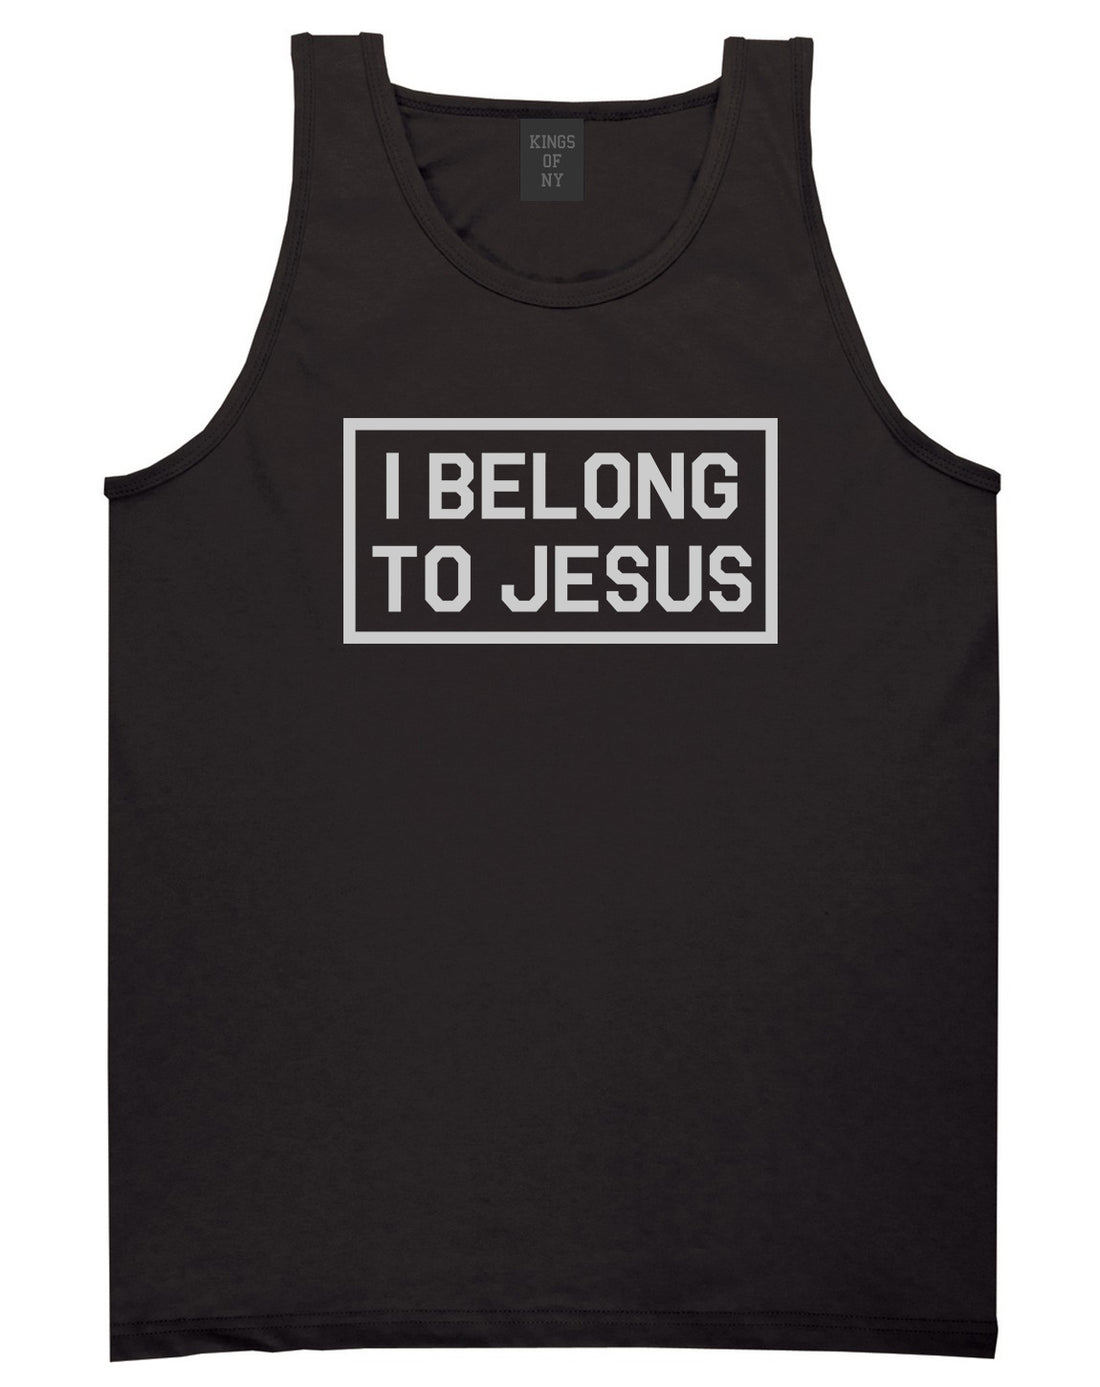 I Belong To Jesus Mens Tank Top Shirt Black